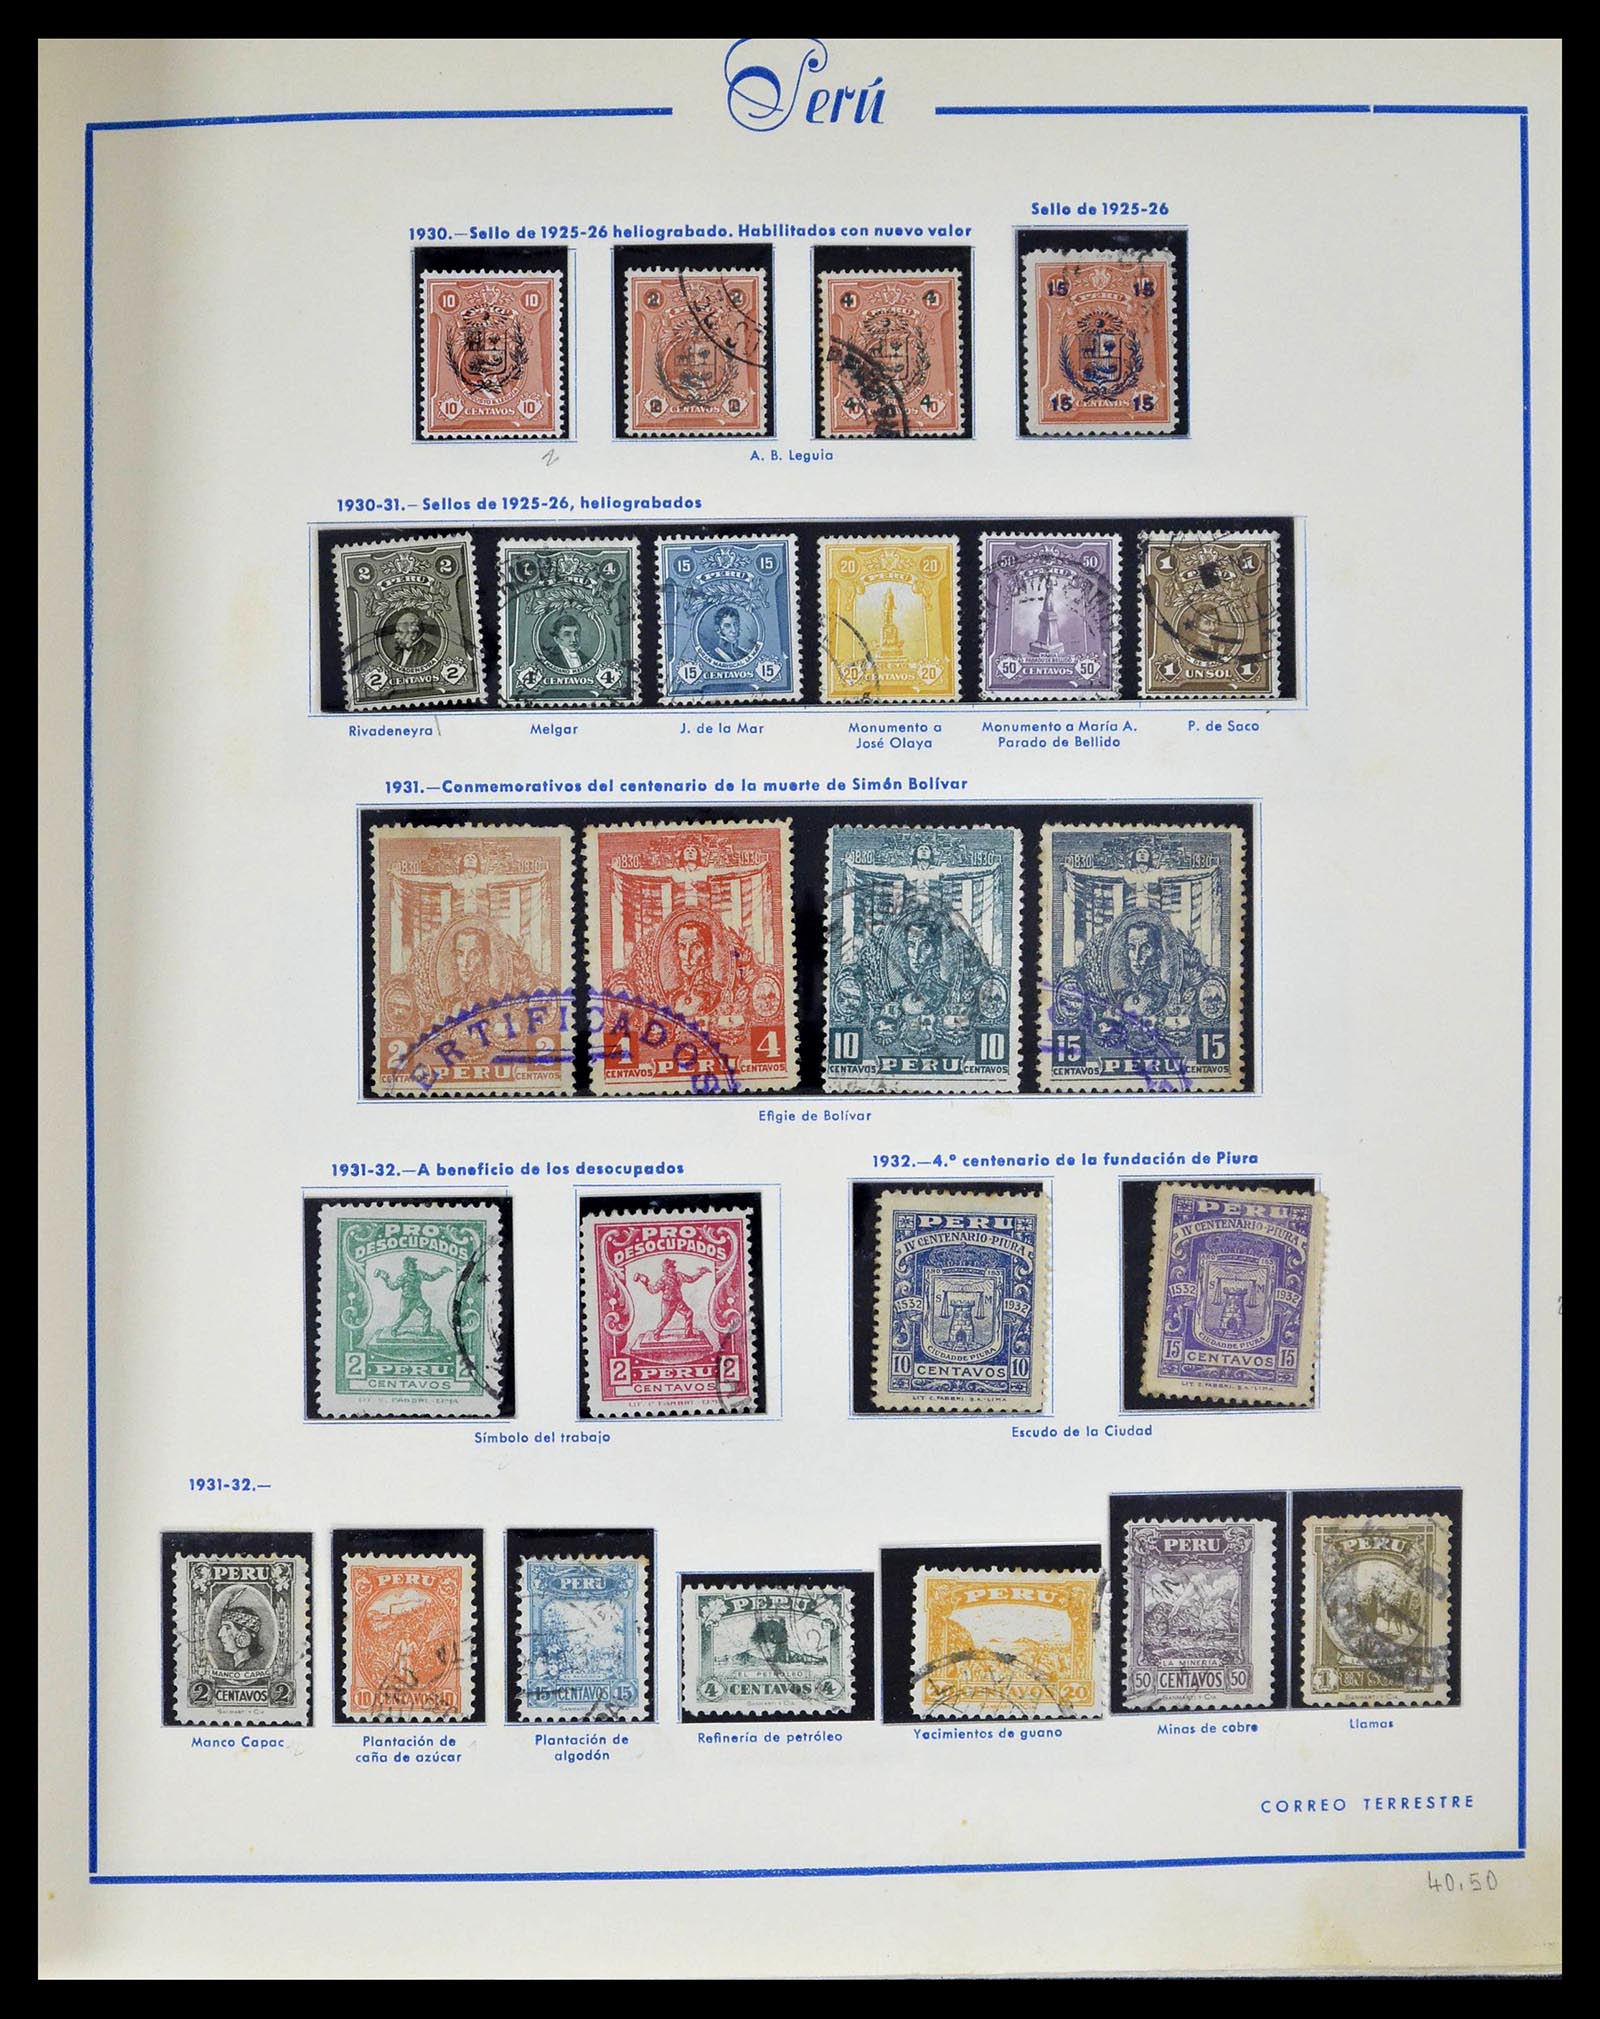 39214 0014 - Stamp collection 39214 Peru 1857-1981.